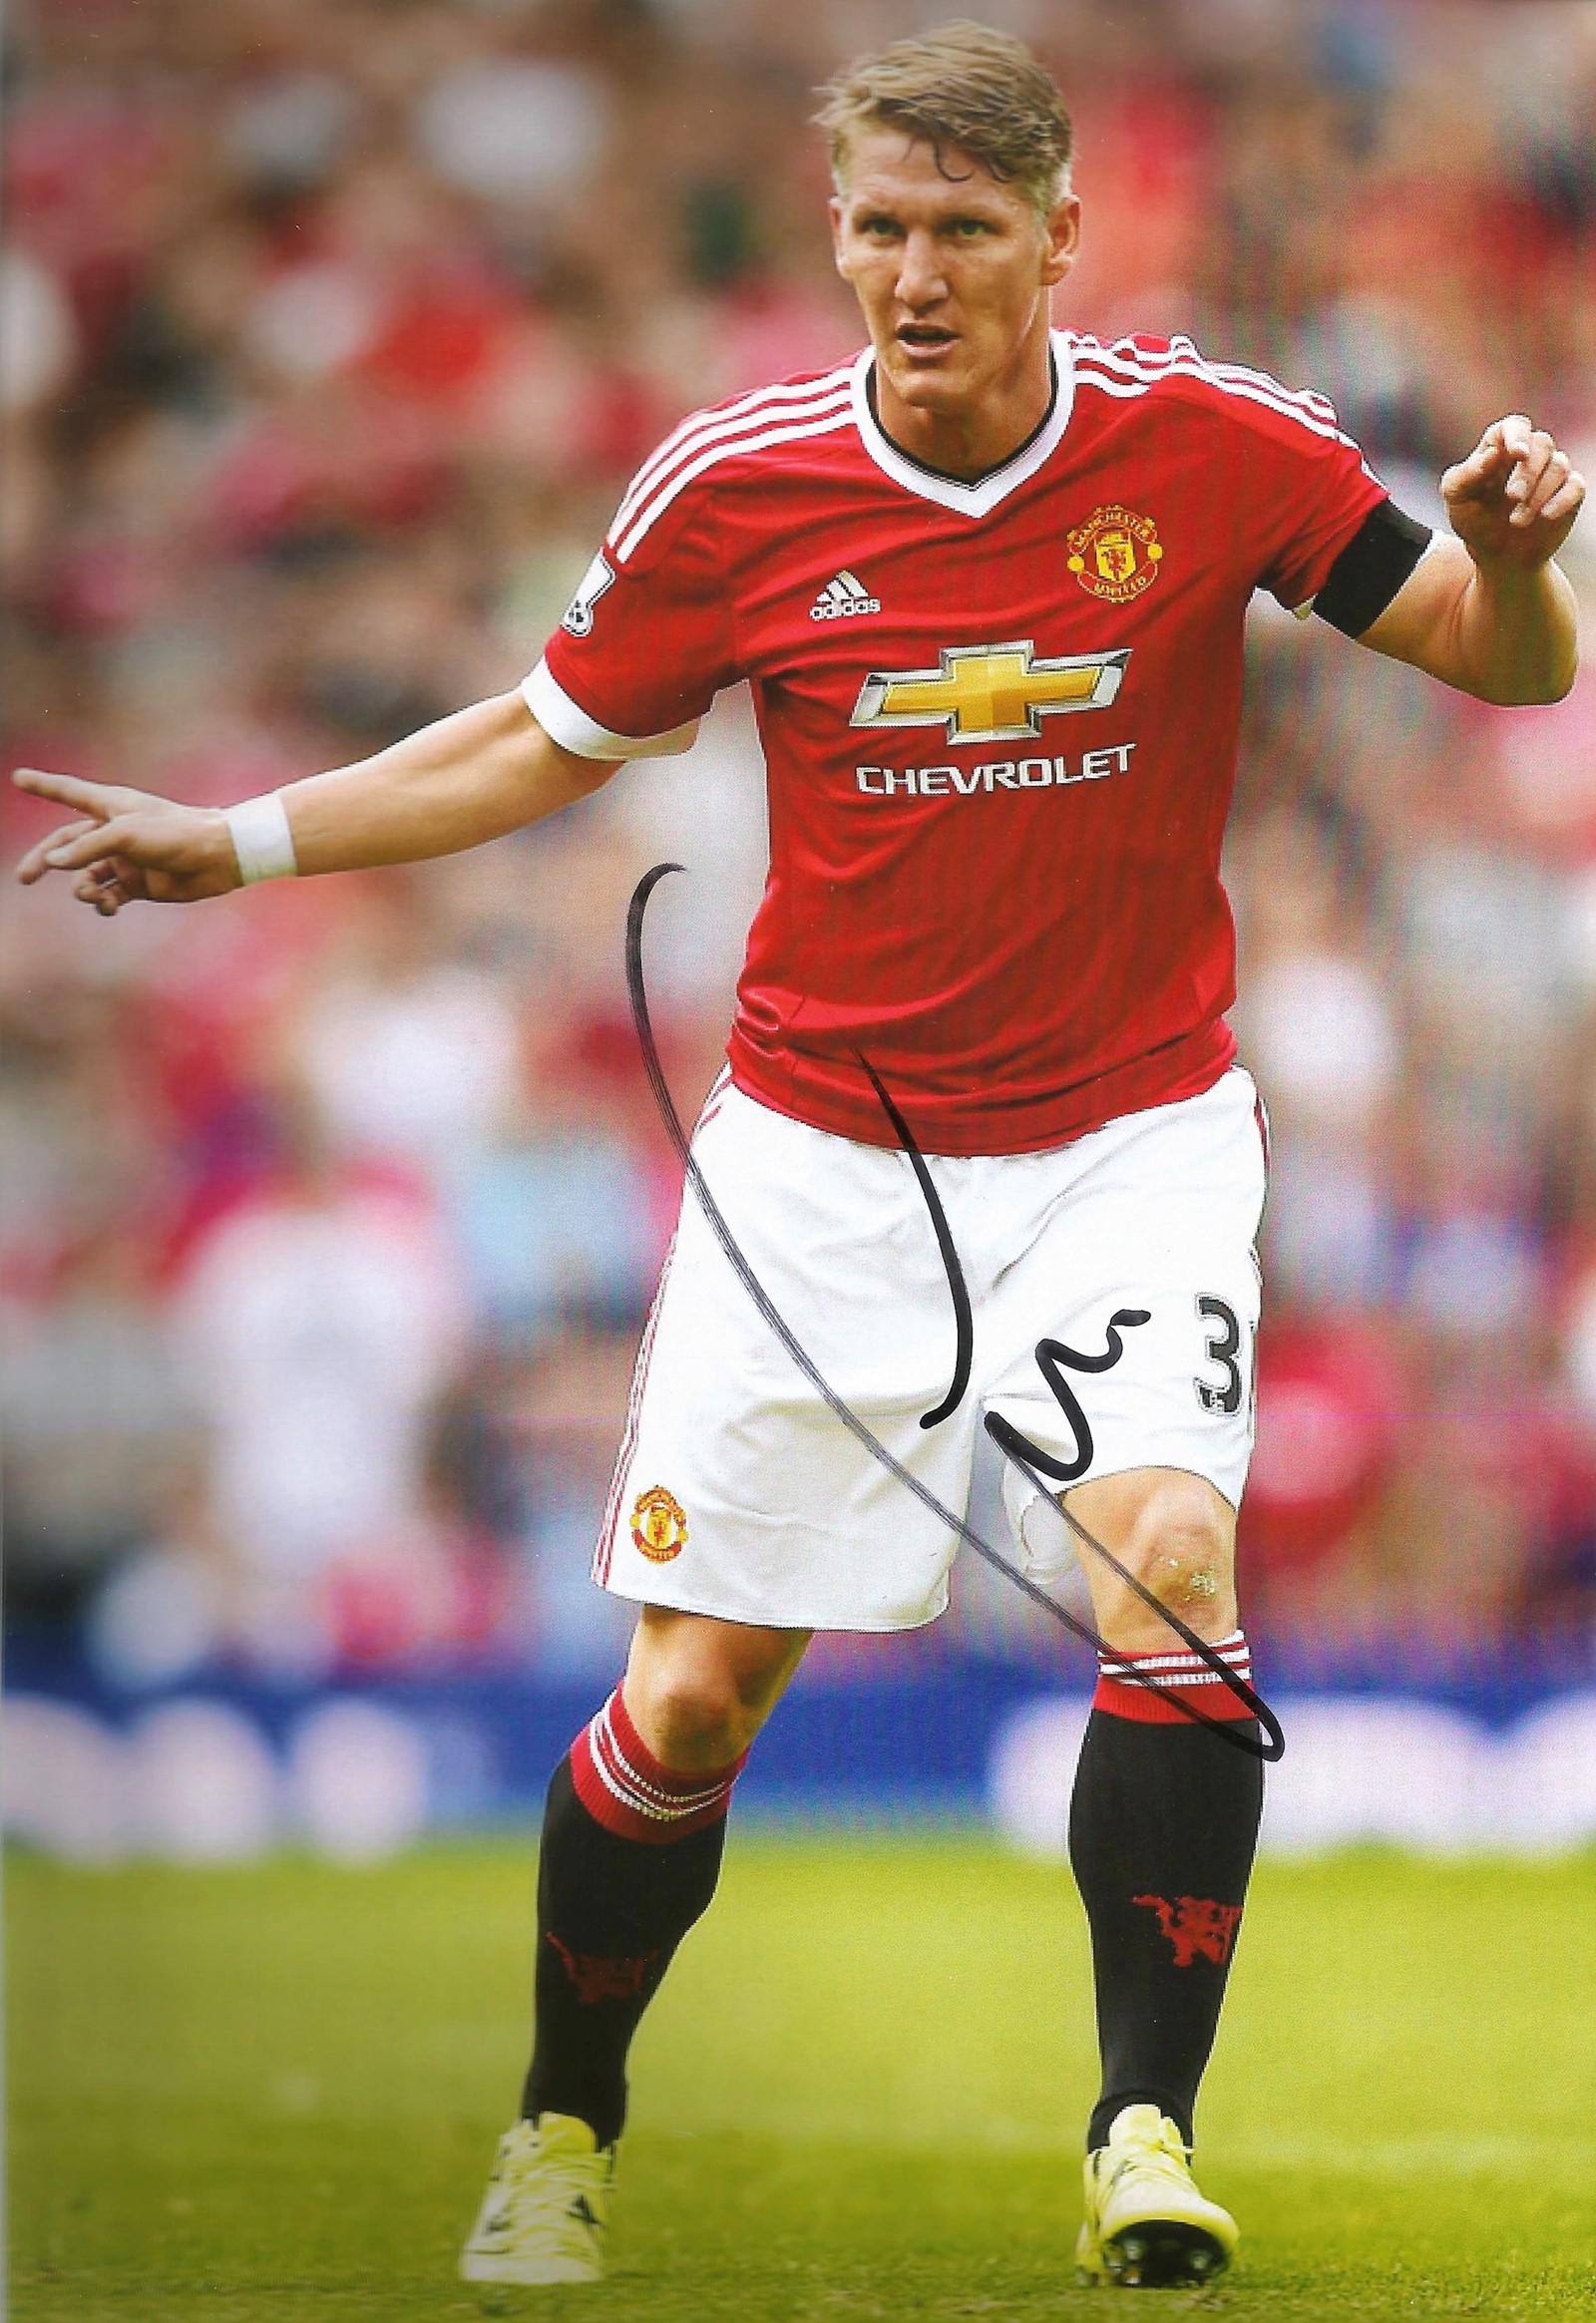 Football Bastian Schweinsteiger signed 12x8 colour Manchester United photo. Bastian